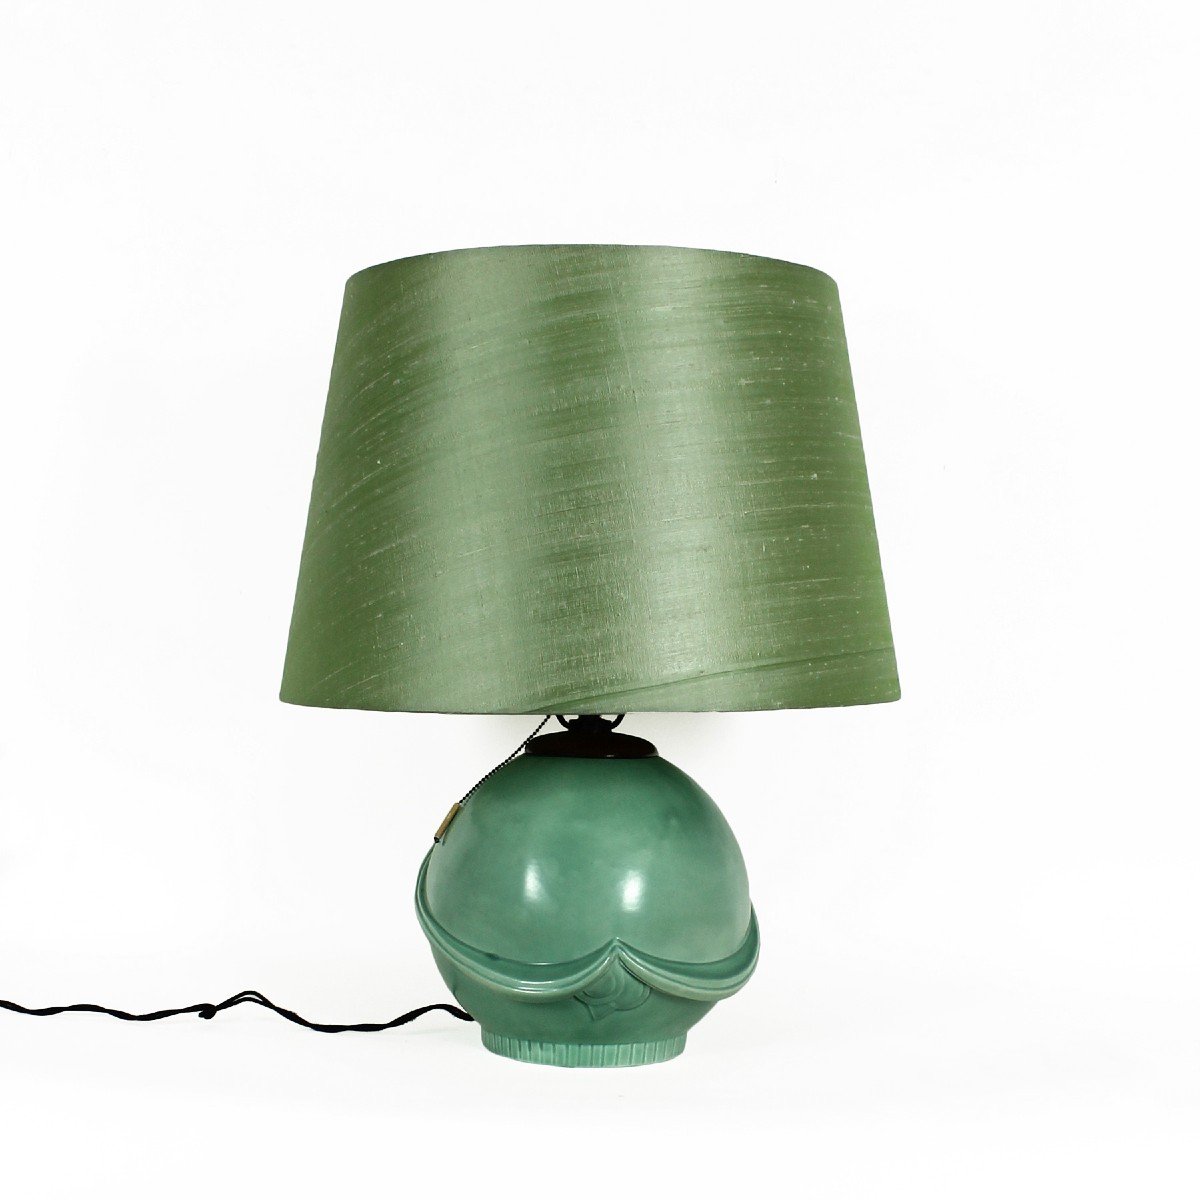 Art Deco Table Lamp In Celadon Green Ceramic - Czechoslovakia 1930